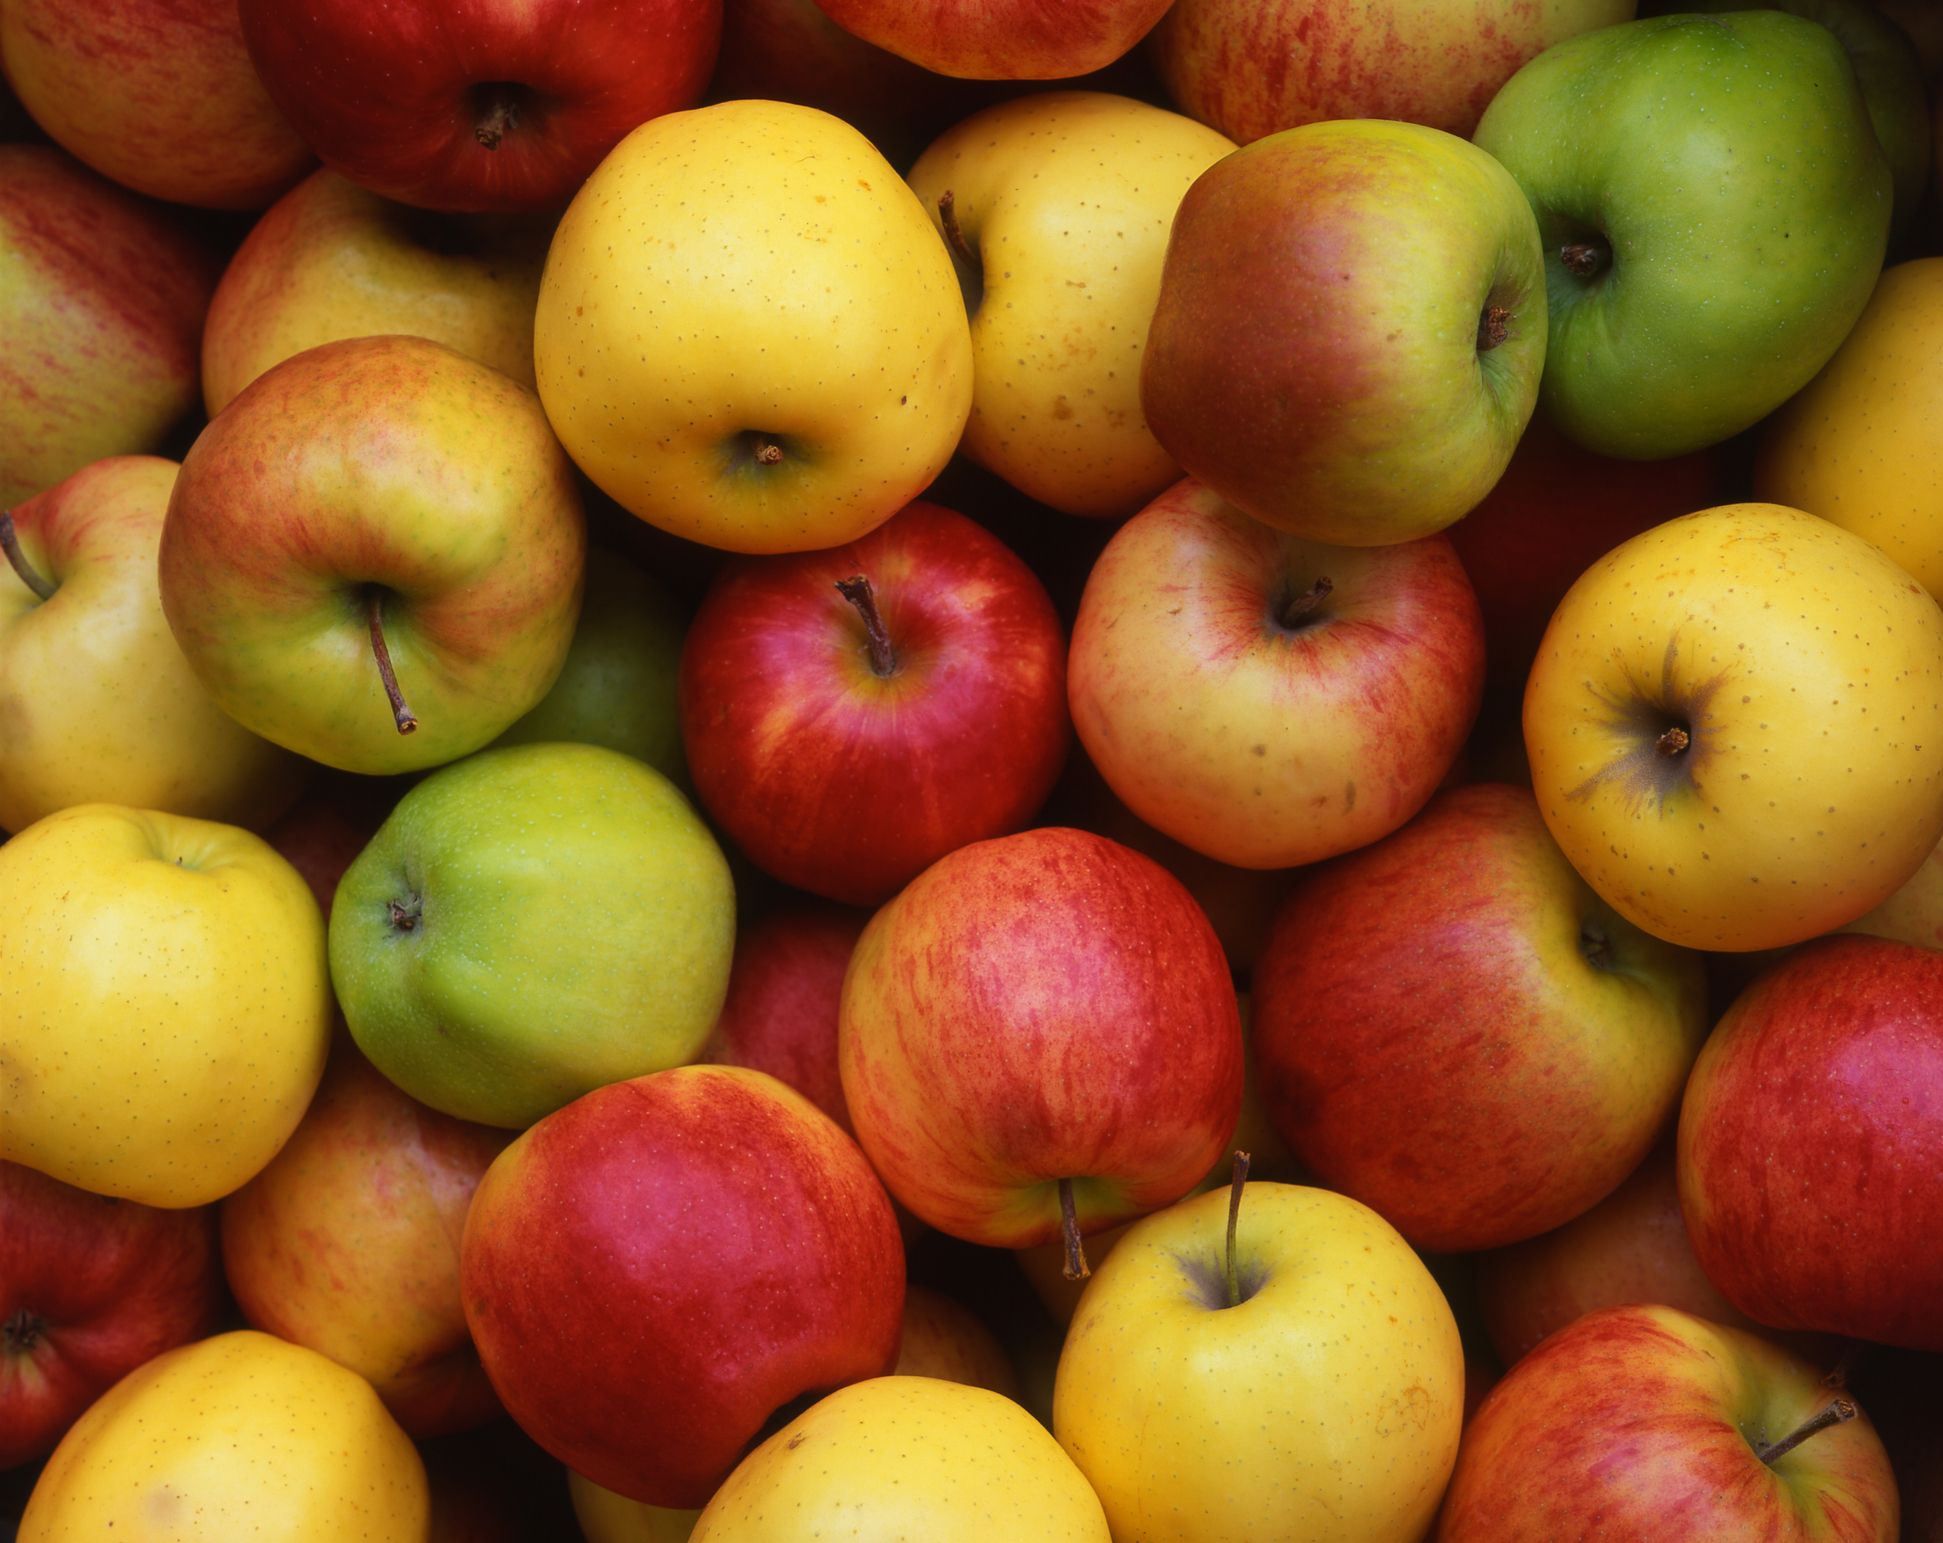 https://hips.hearstapps.com/hmg-prod/images/apples-at-farmers-market-royalty-free-image-1689615600.jpg